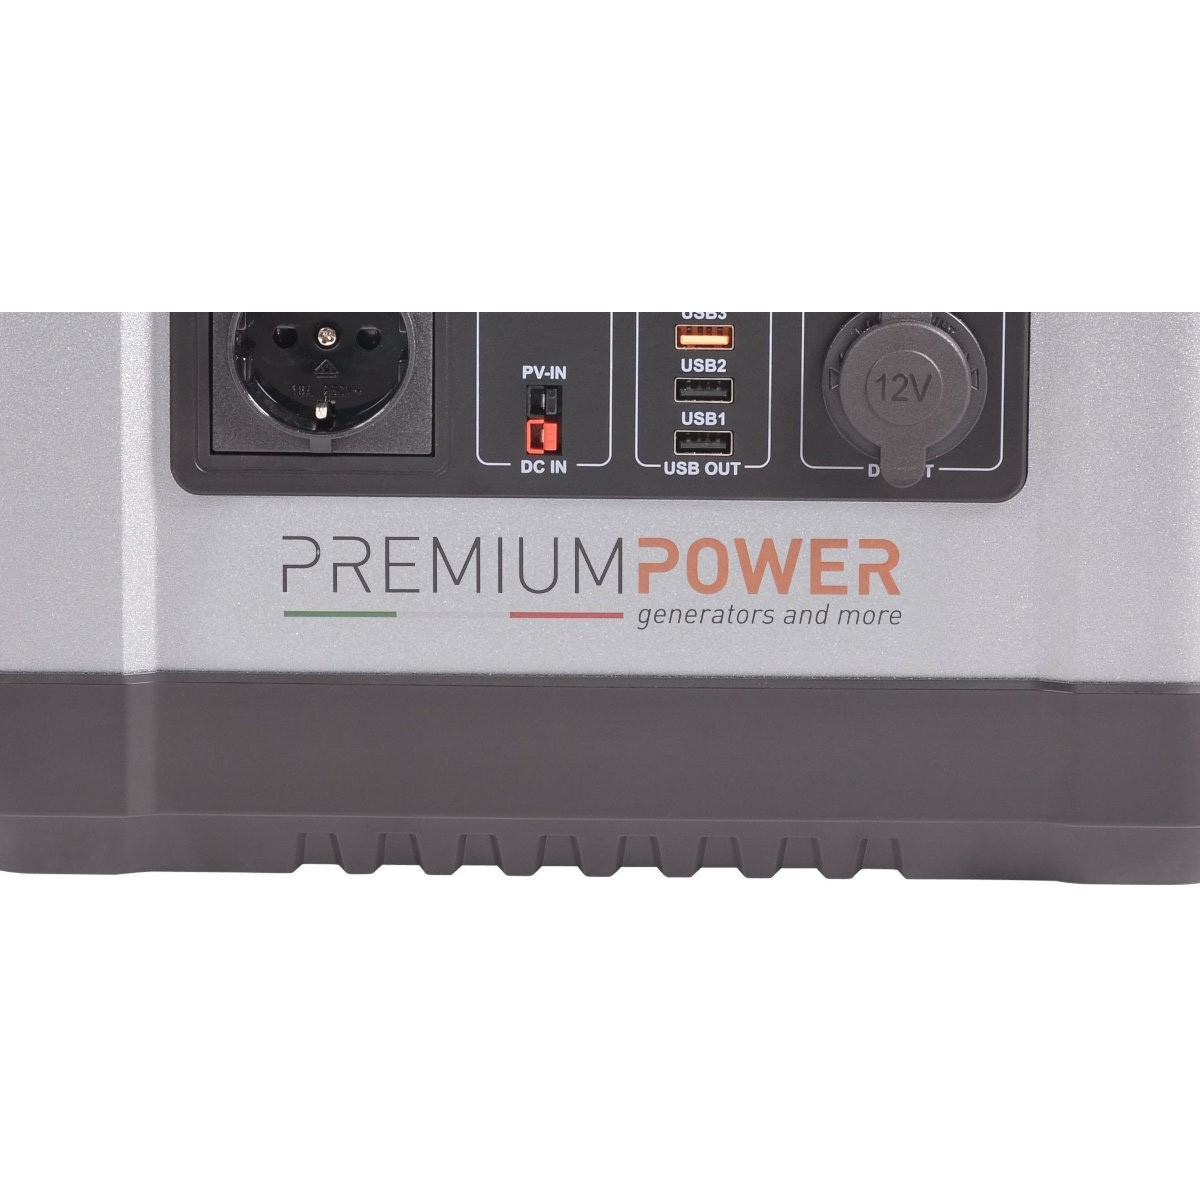 Premium Power 1000 набор массы. Pb power